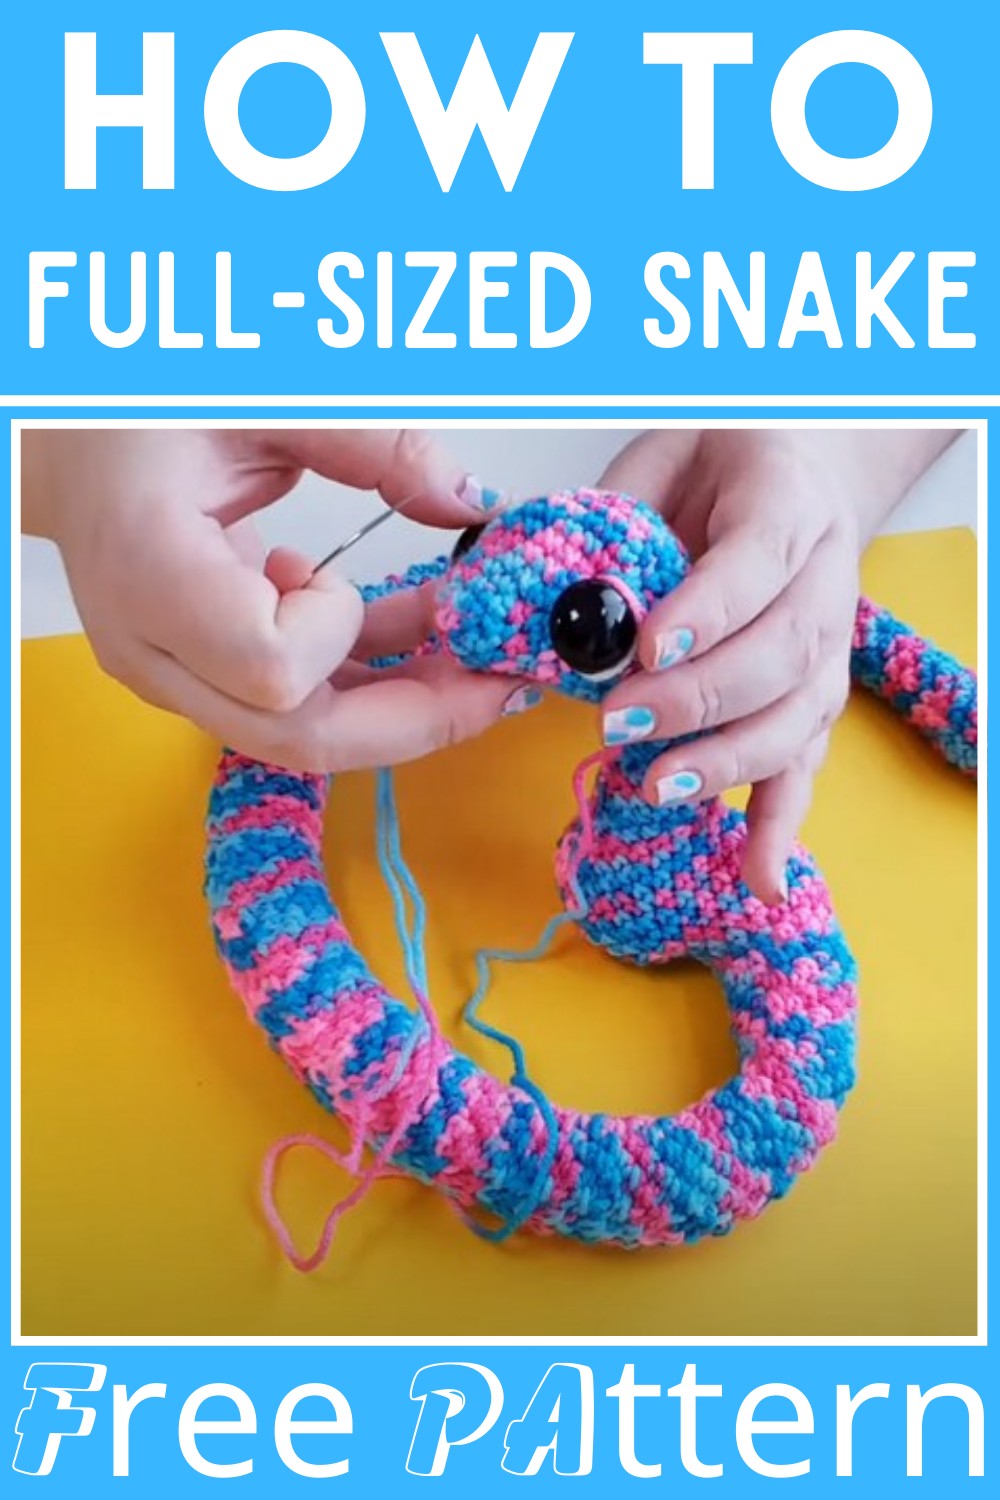 How To Crochet A Full-Sized Snake